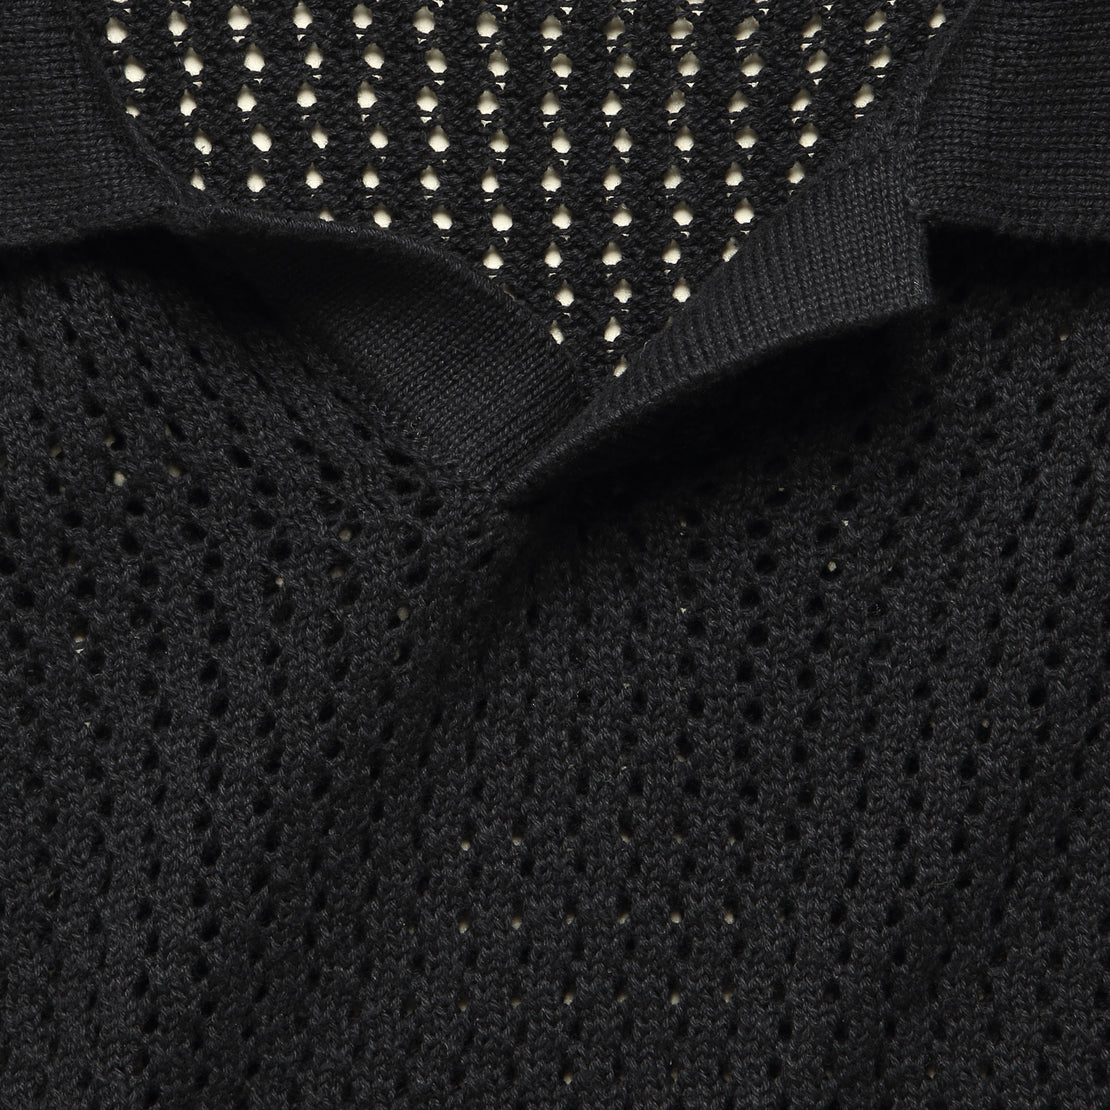 Yuma Polo - Black - Knickerbocker - STAG Provisions - Tops - S/S Knit